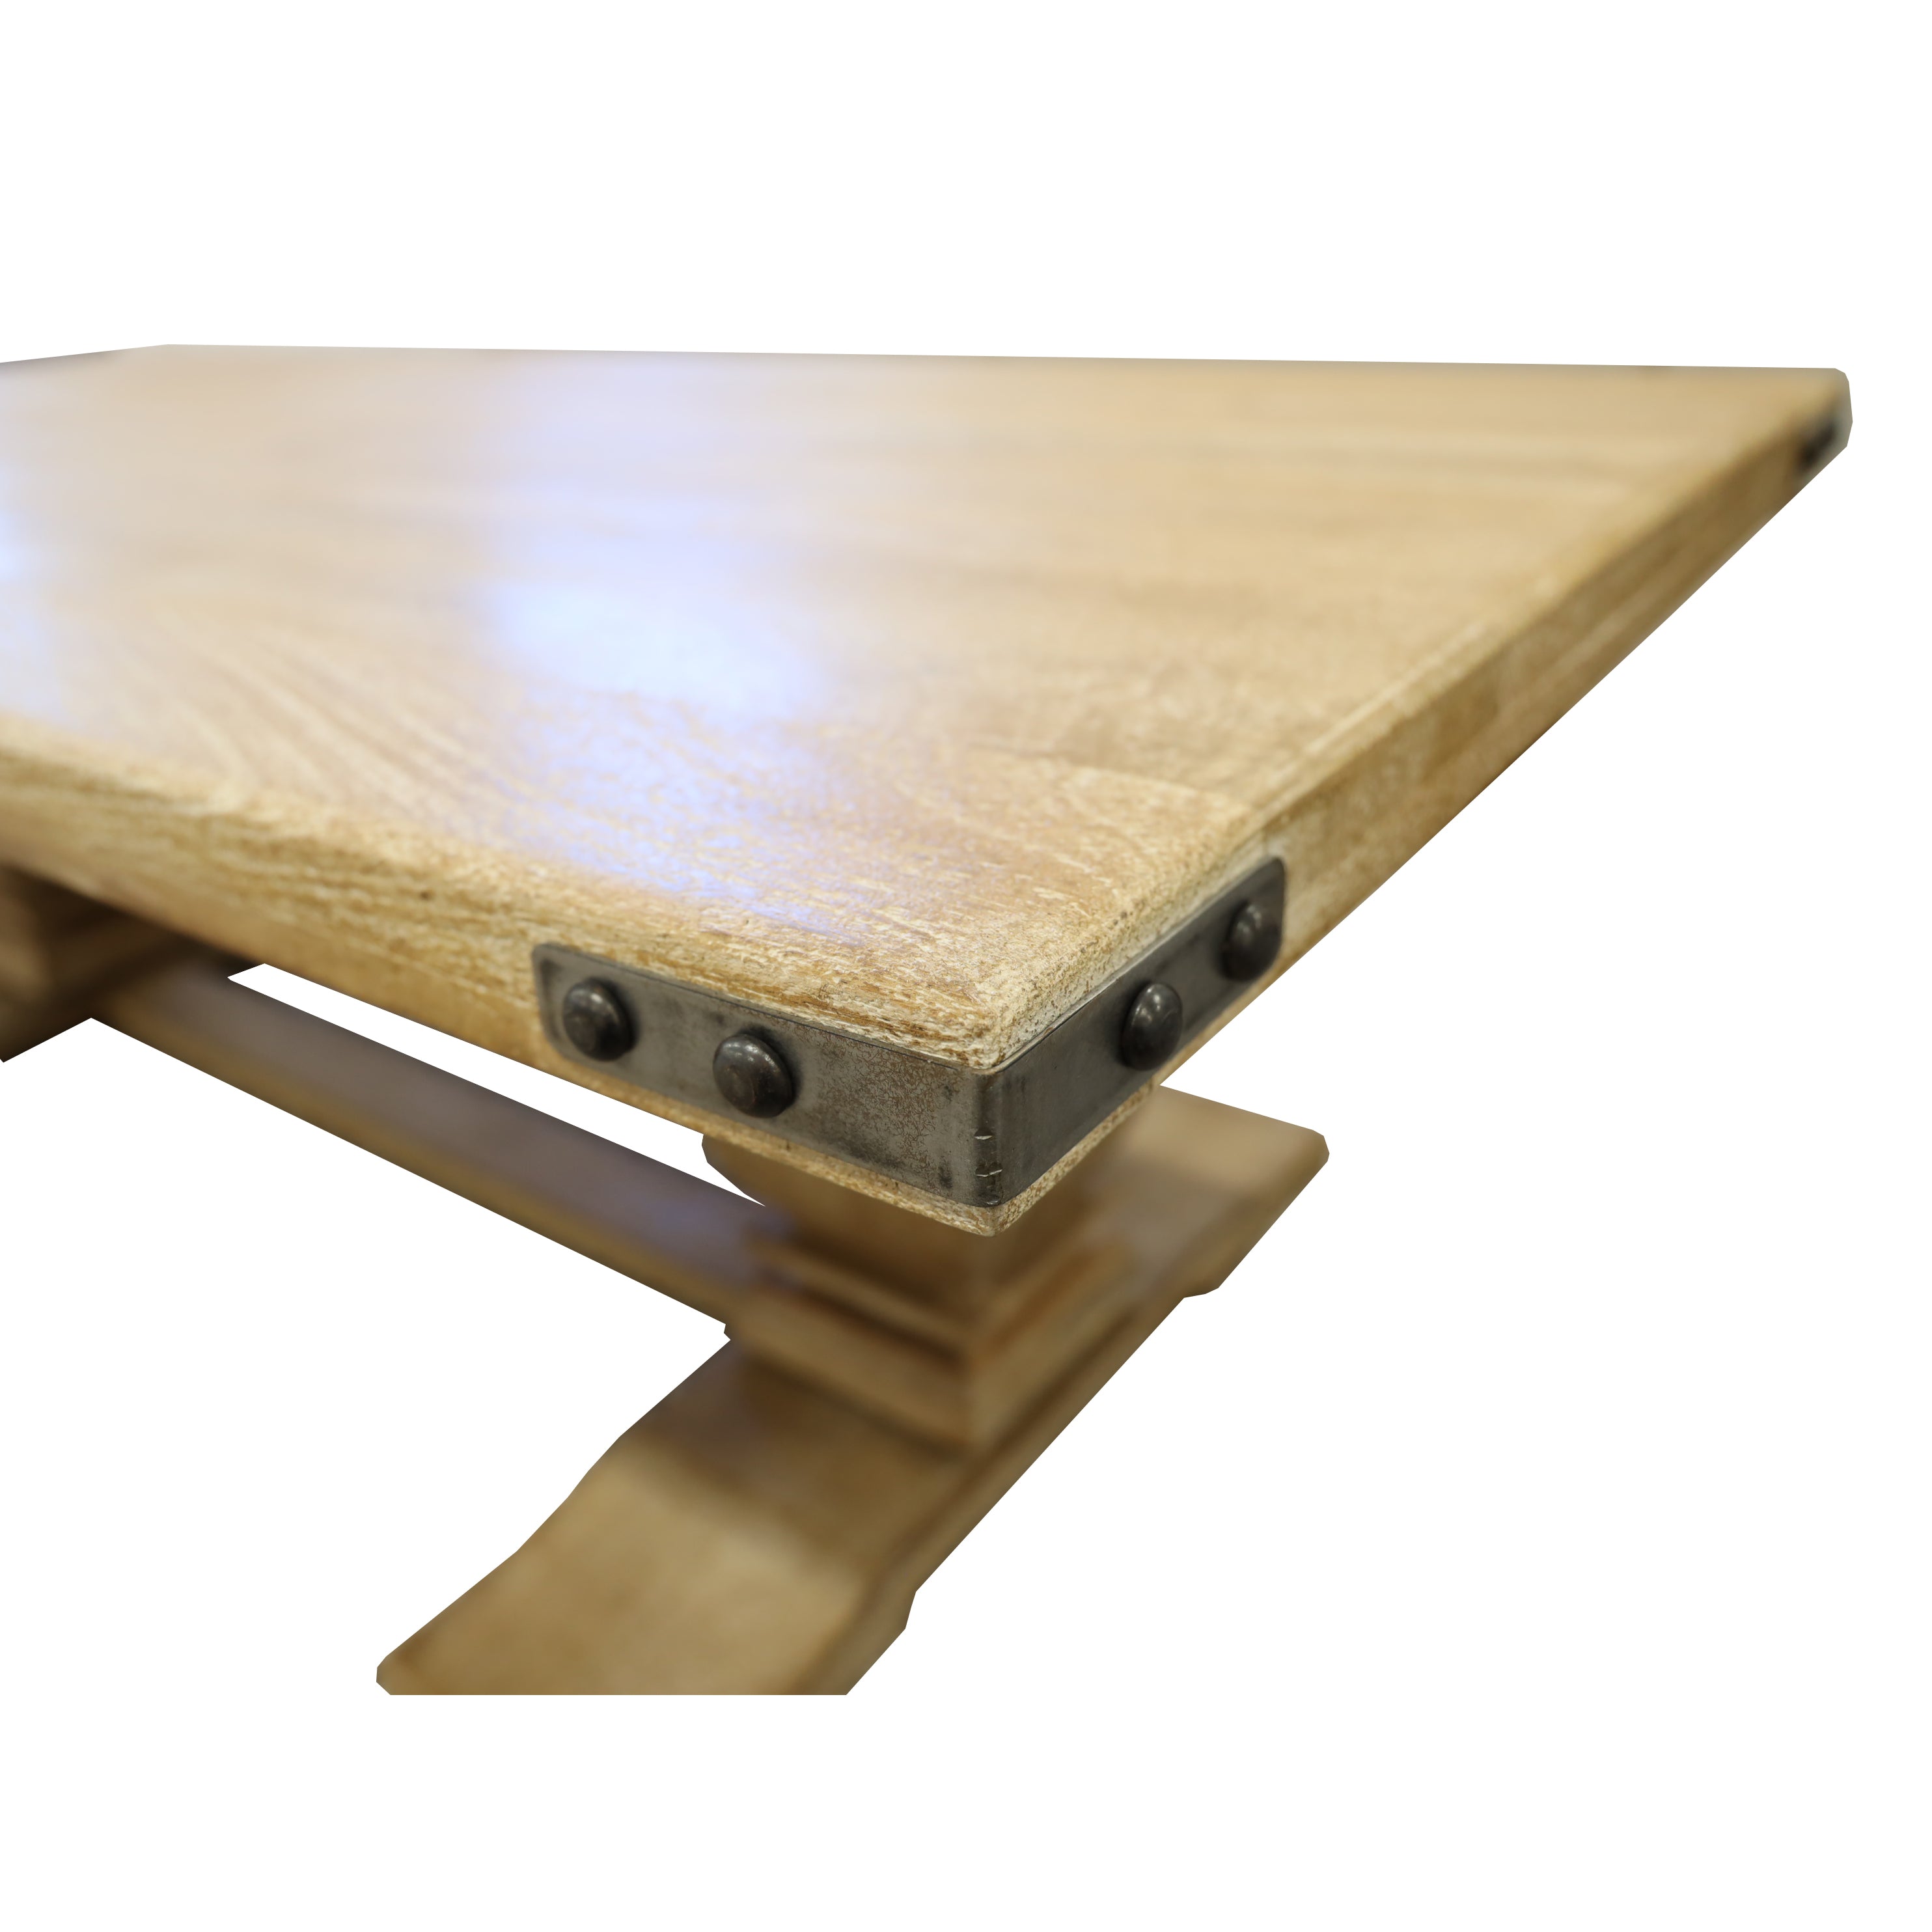 Coffee Table 140Cm Pedestal Solid Mango Timber Wood - Honey Wash